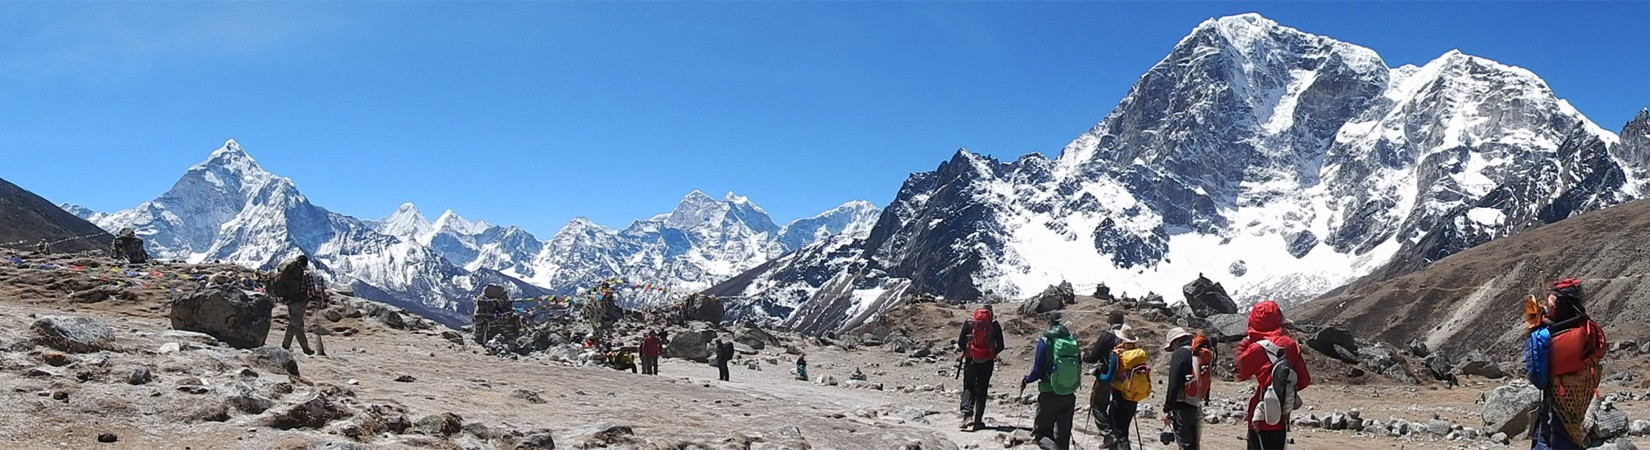 Trekking In Nepal | Everest Base Camp Trekking Trail Near Thokla Pass 4830 m